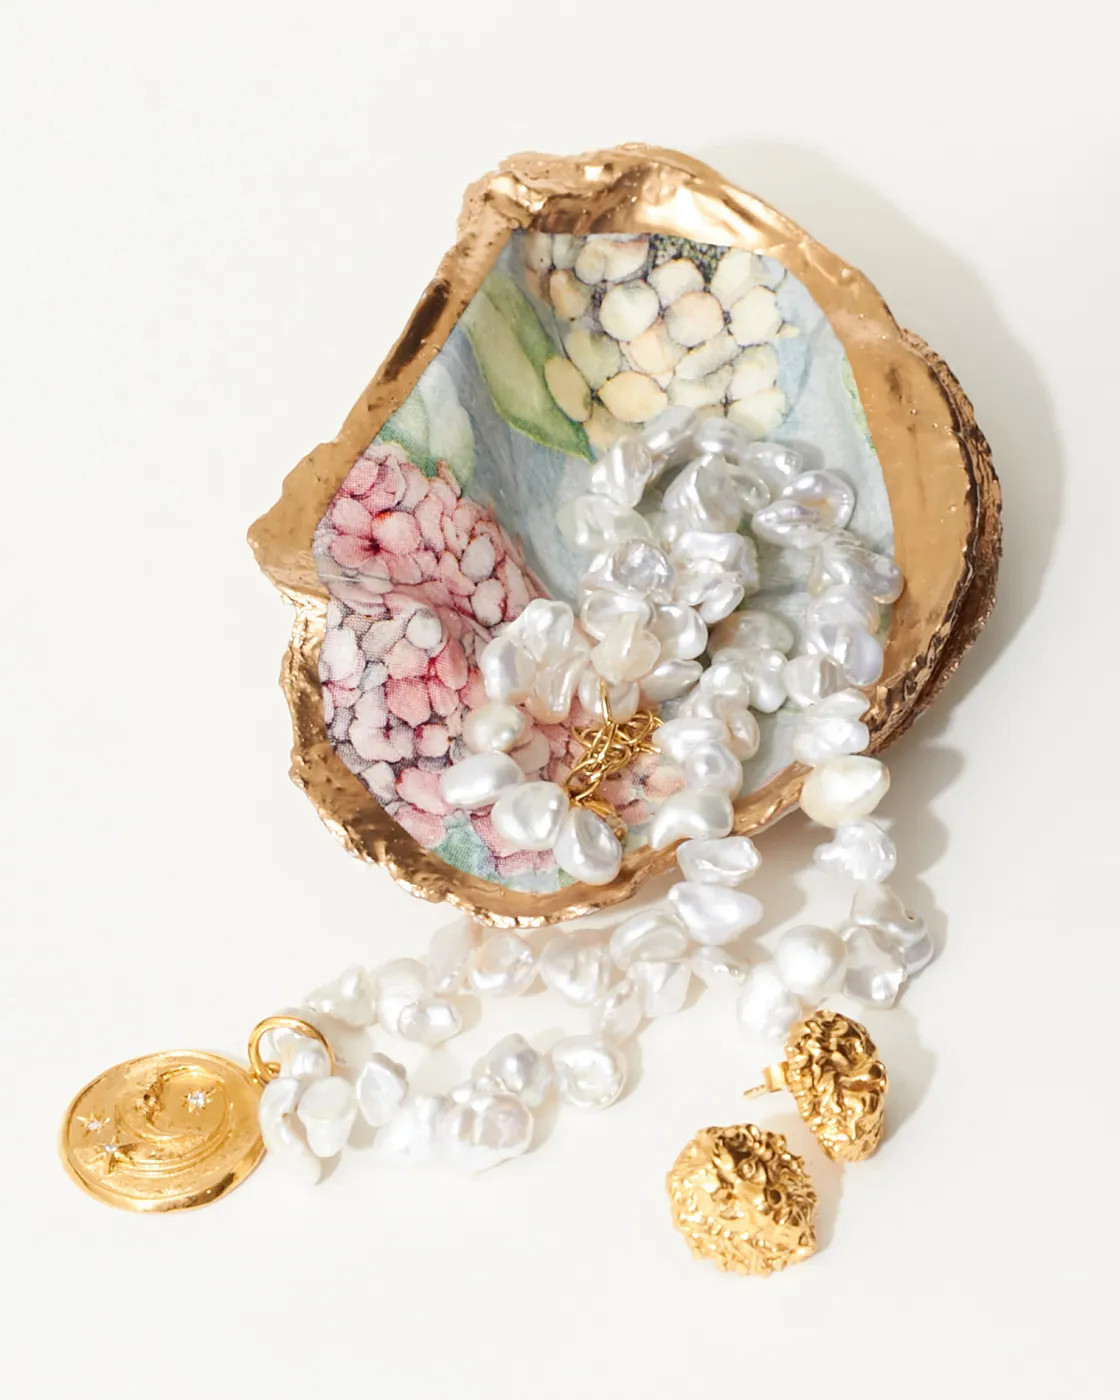 Luna Medium Statement Pearl Necklace with Gold Vermeil Pendant